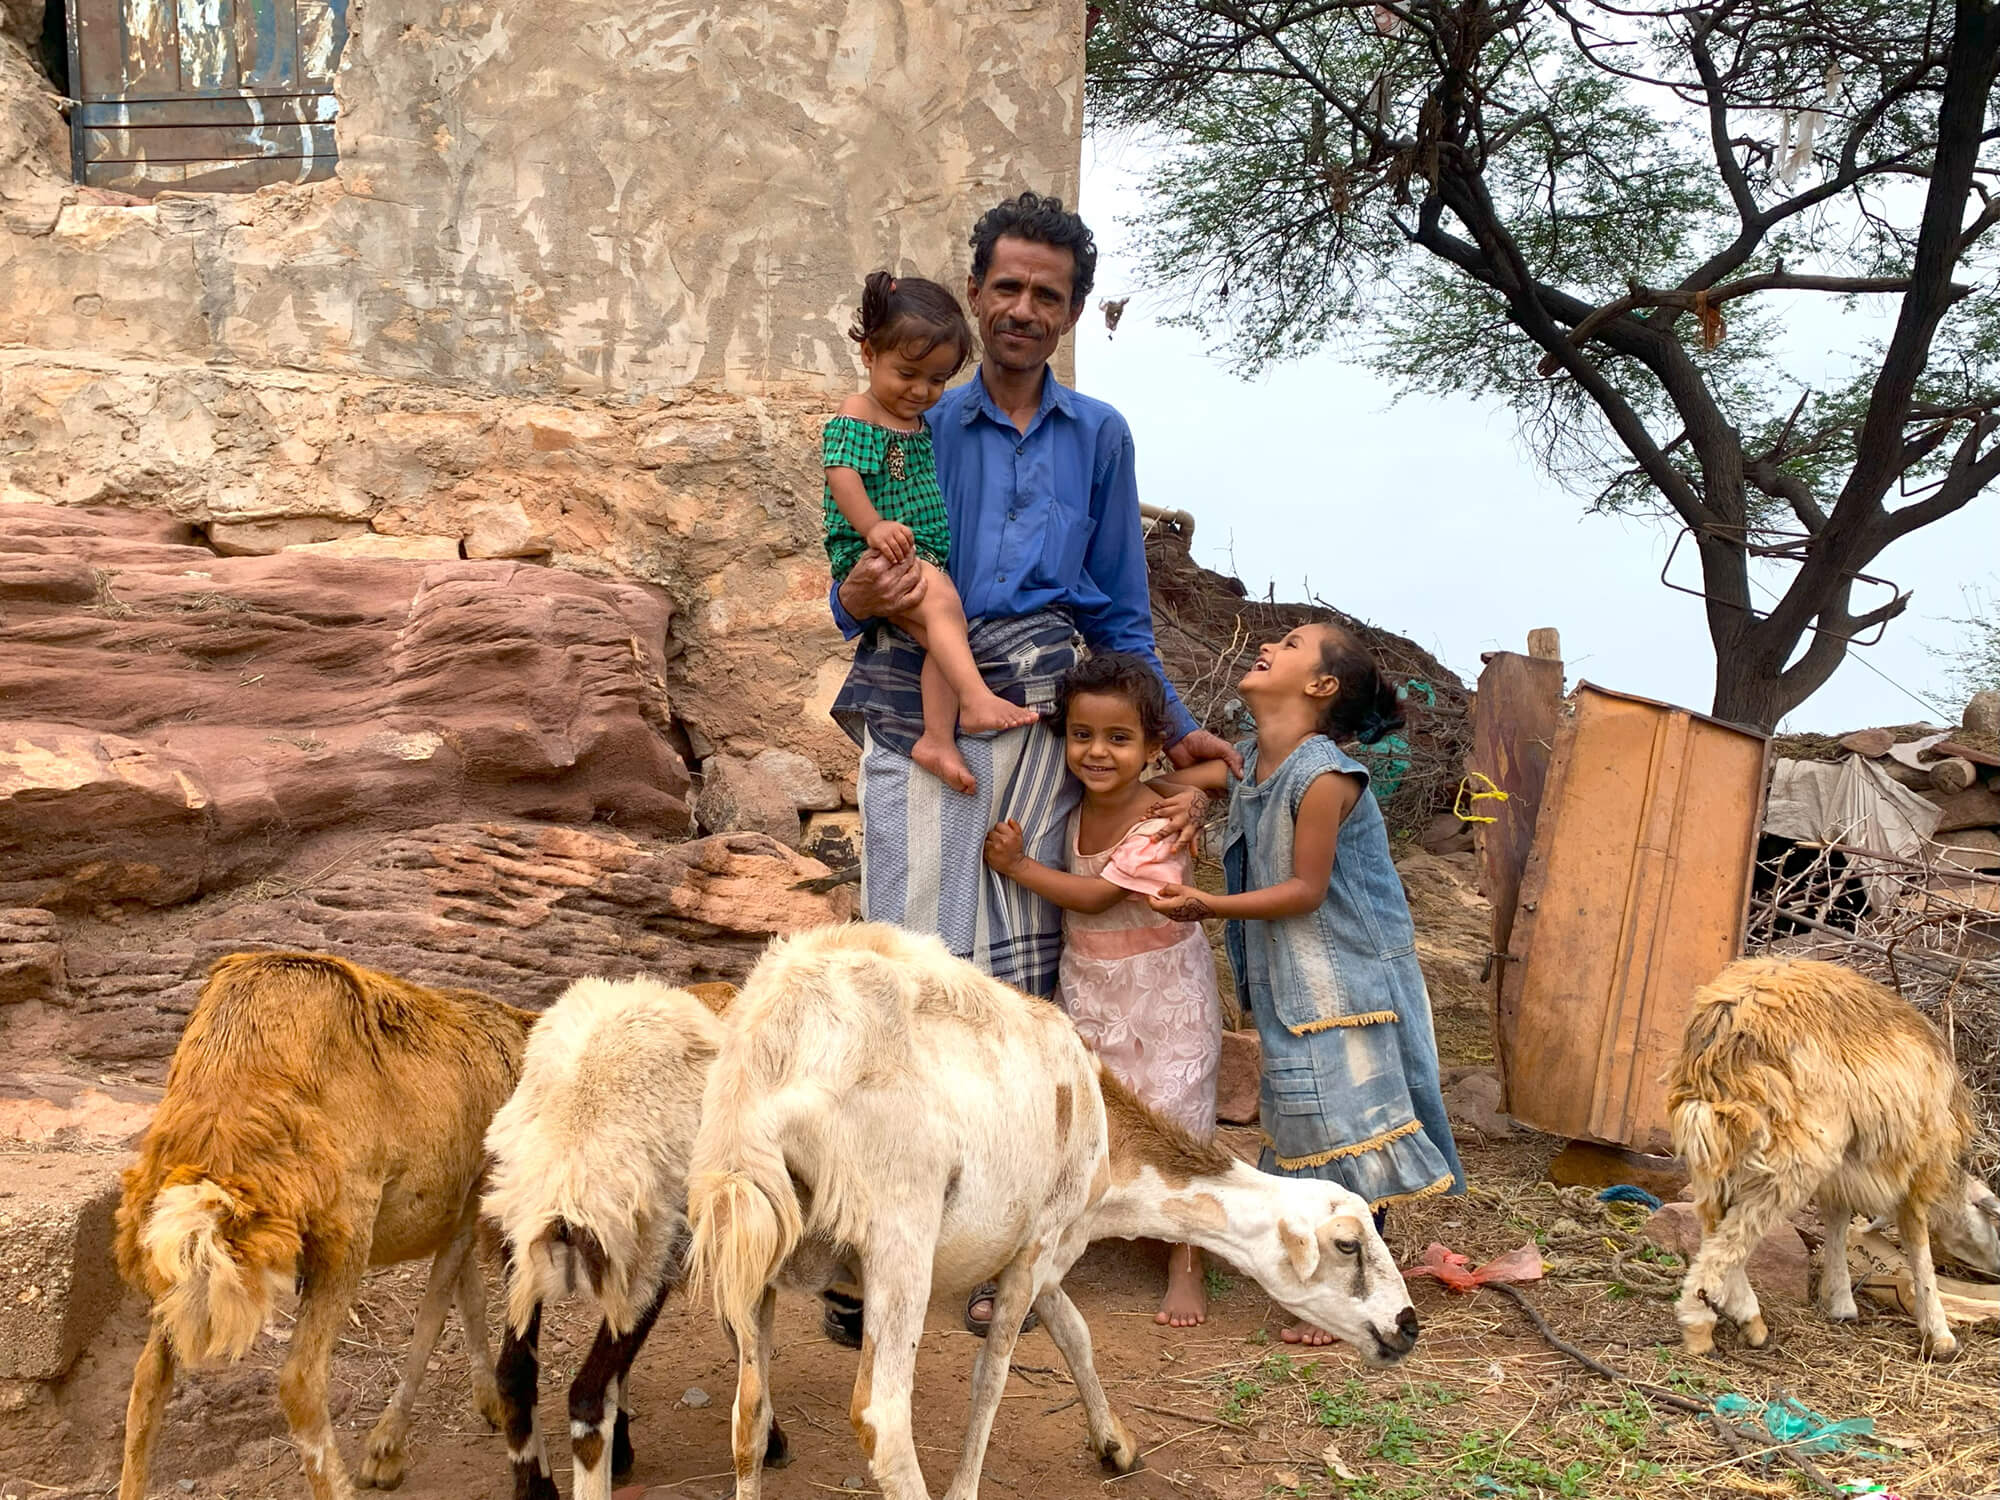 Hussein Masoud stands with his three children and their sheep in Khillah village, Yemen.